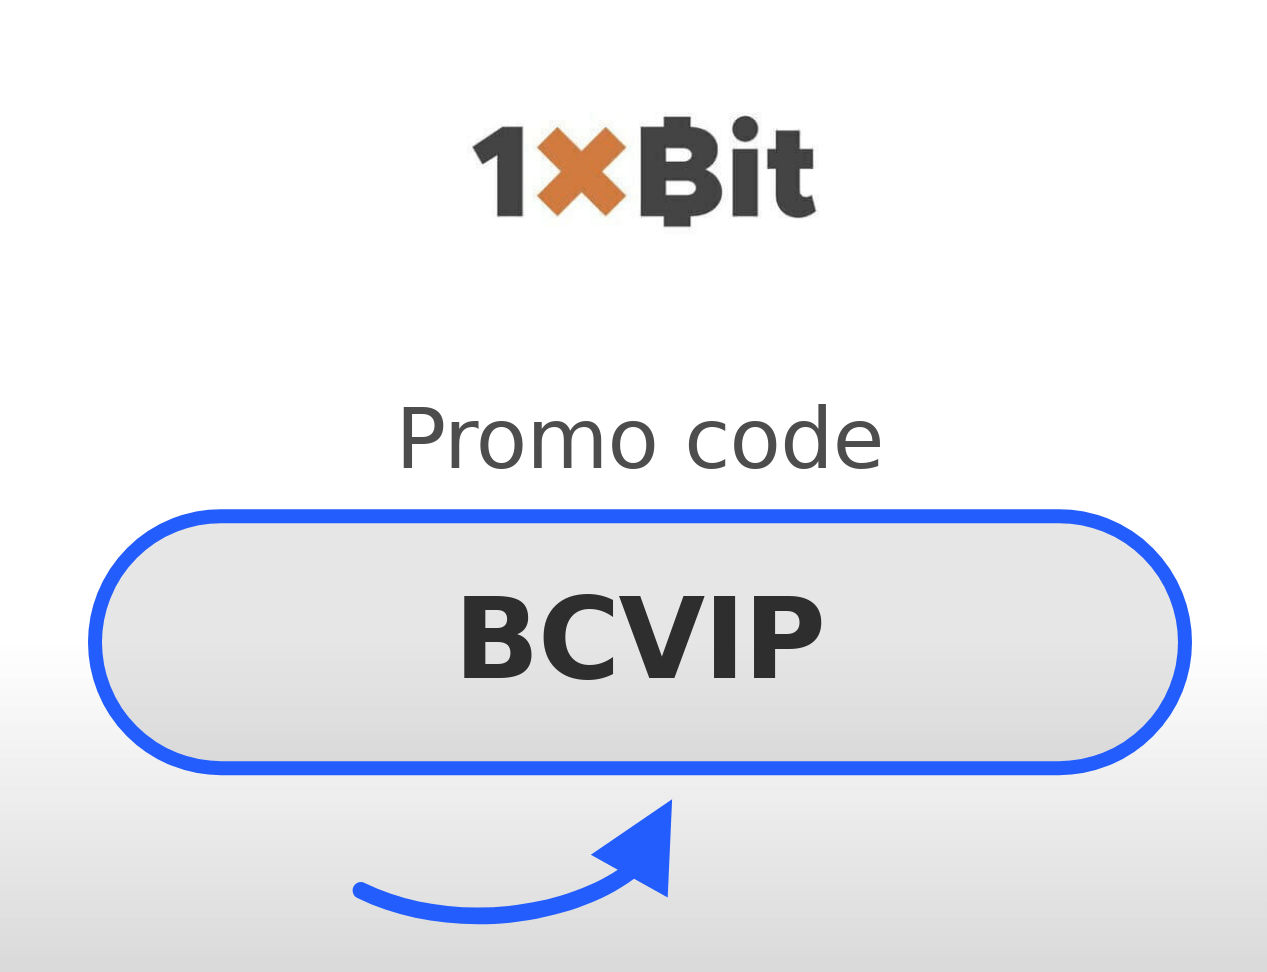 1xBit Promo Code: BCVIP